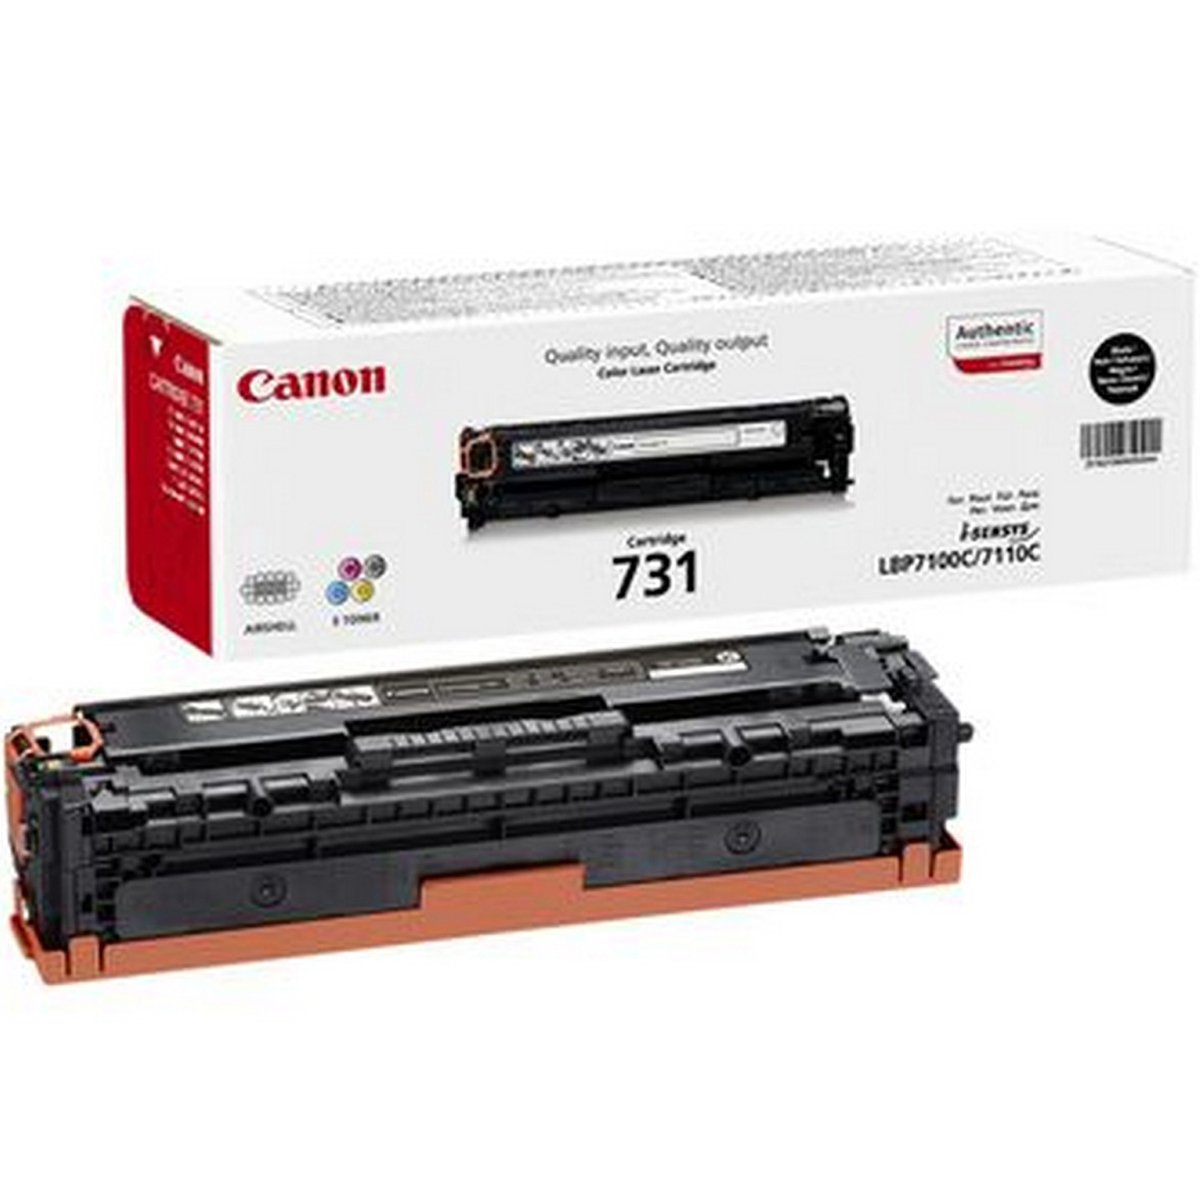 Canon Laser Toner Cartridge 731 Black